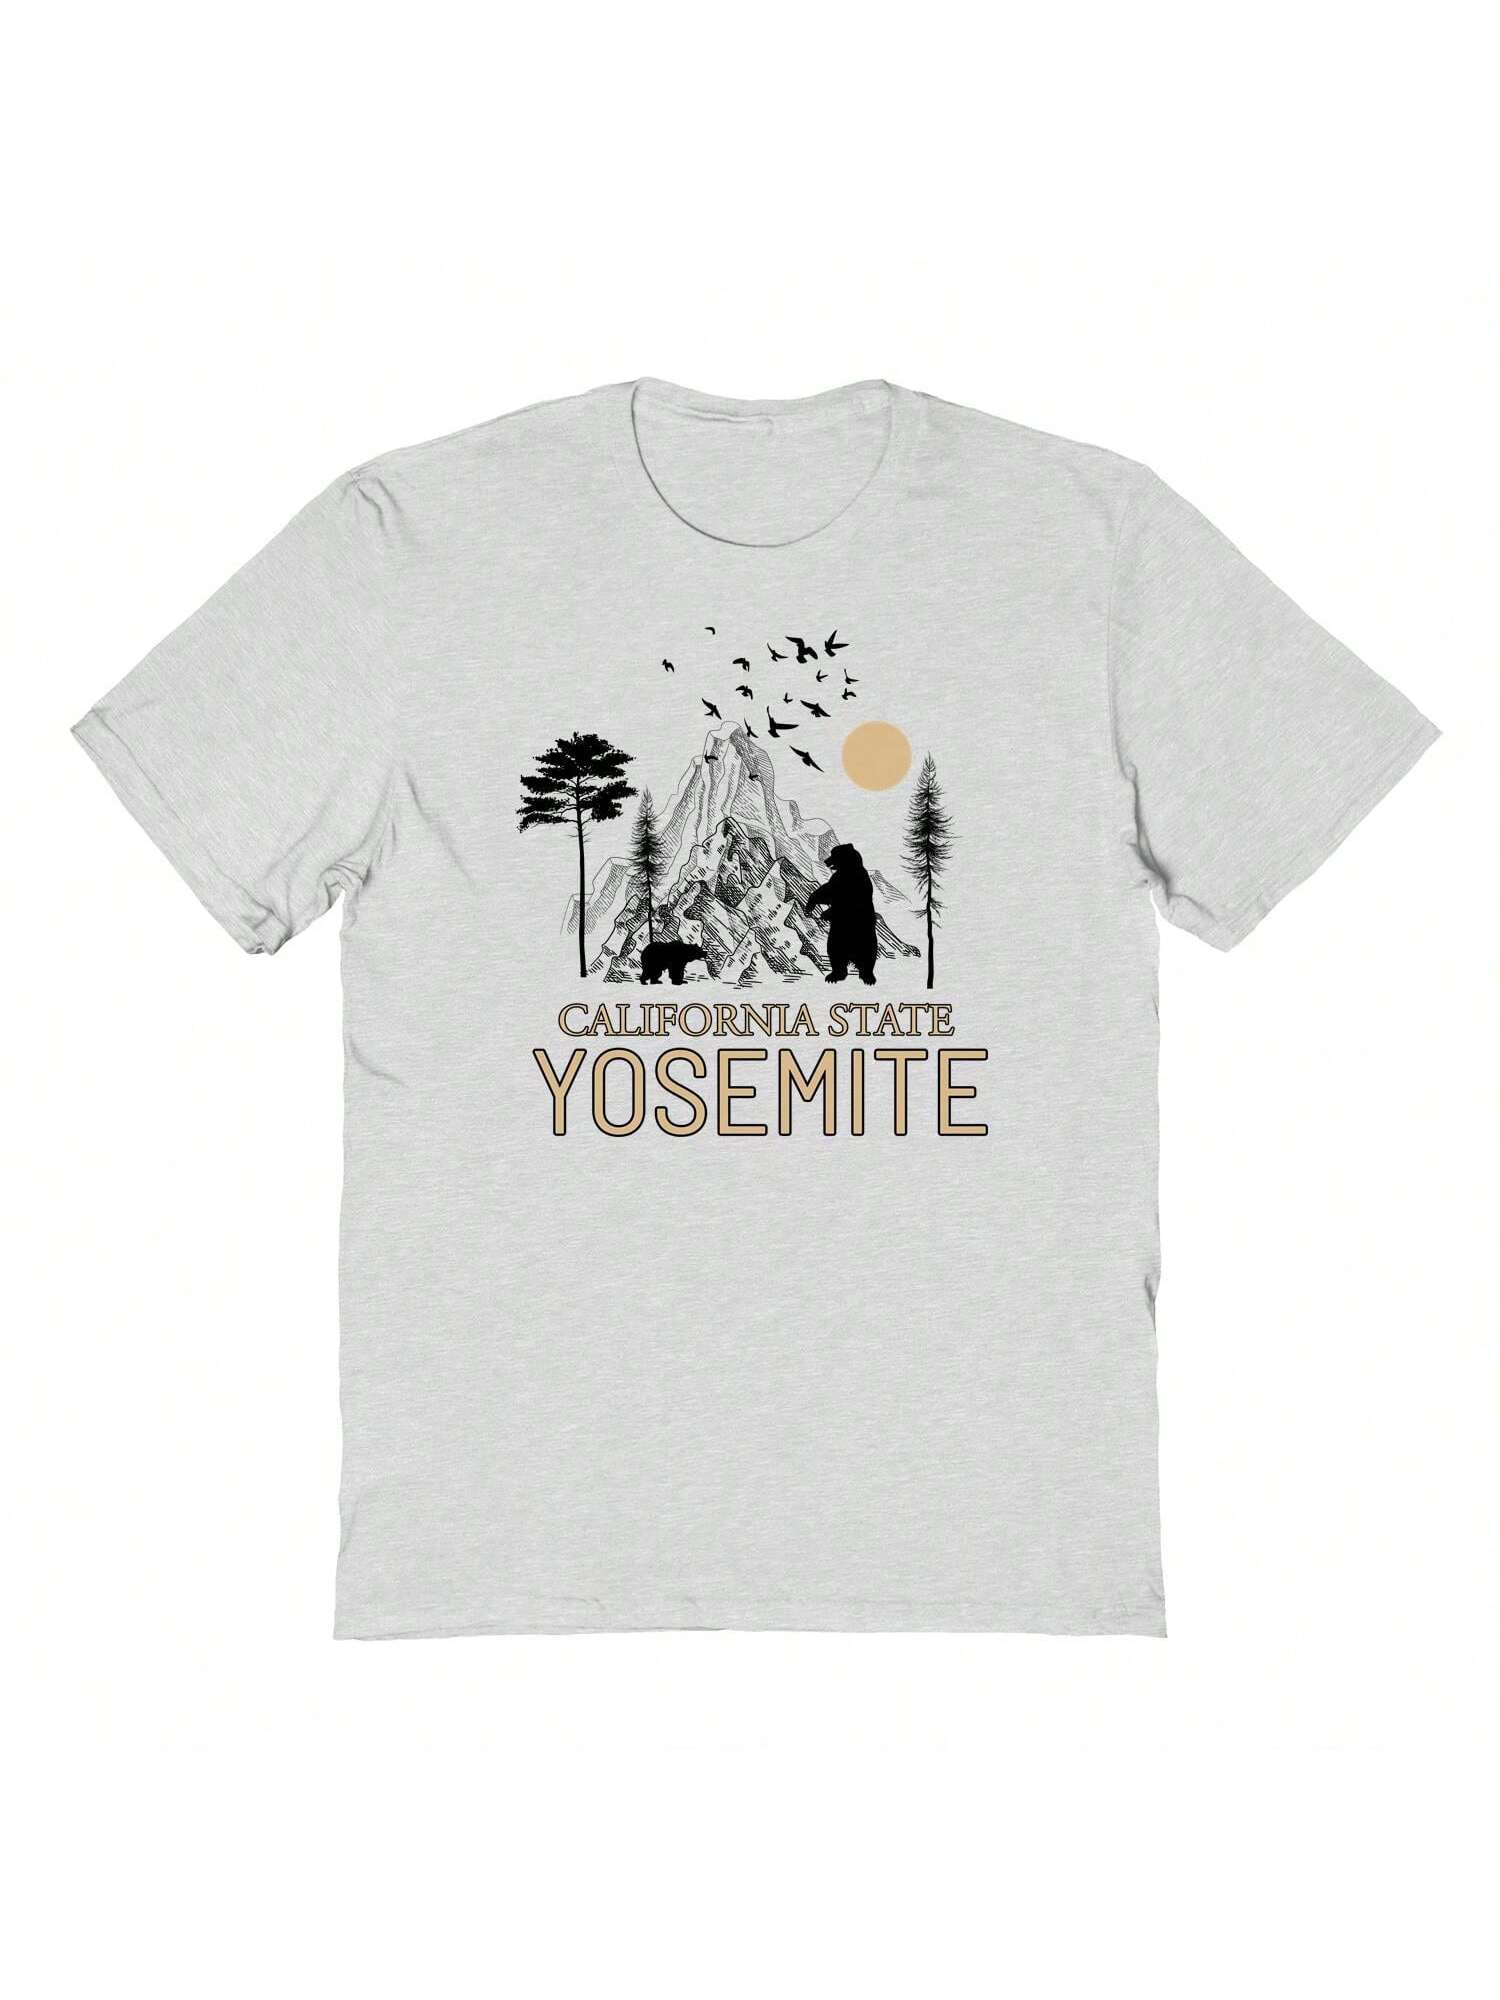 Мужская хлопковая футболка с короткими рукавами Country Parks California State Yose Mite Graphic Sand, светло-серый sublimox oxalic acid sublimator beekeeping varroa mite 110v